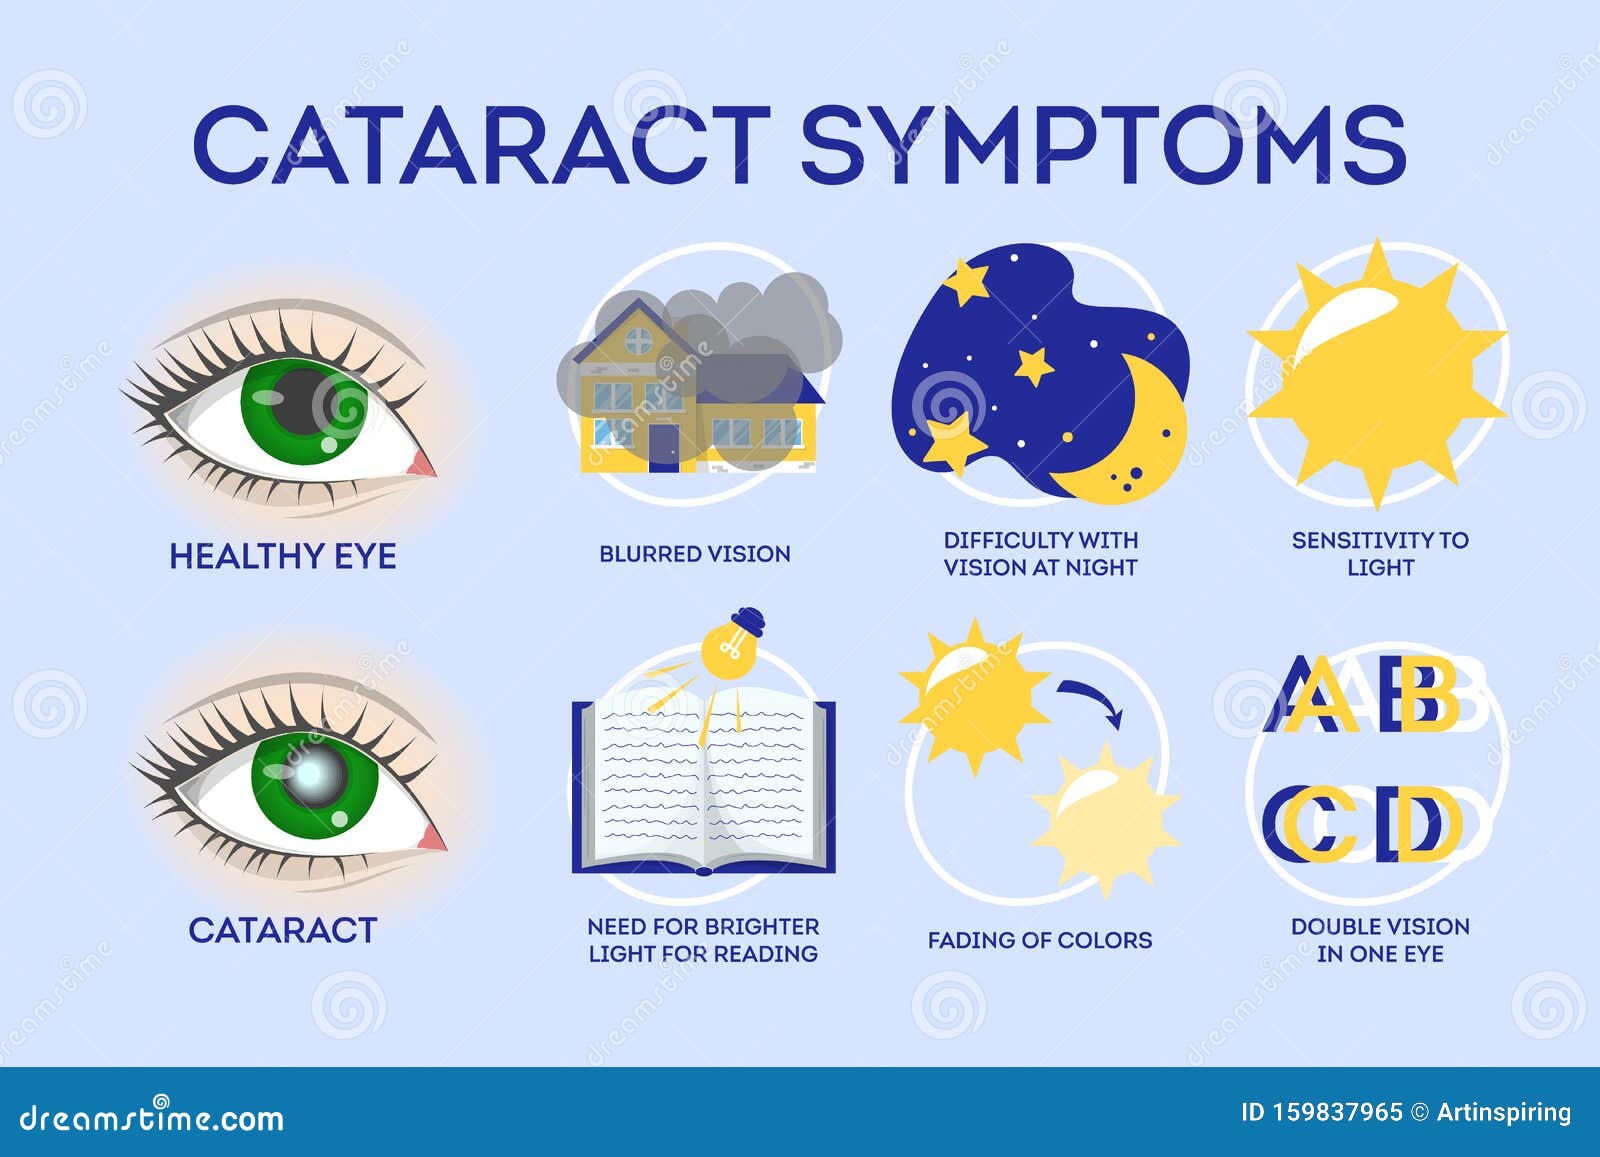 cataract disease symptoms inographic. eye illness, blindness